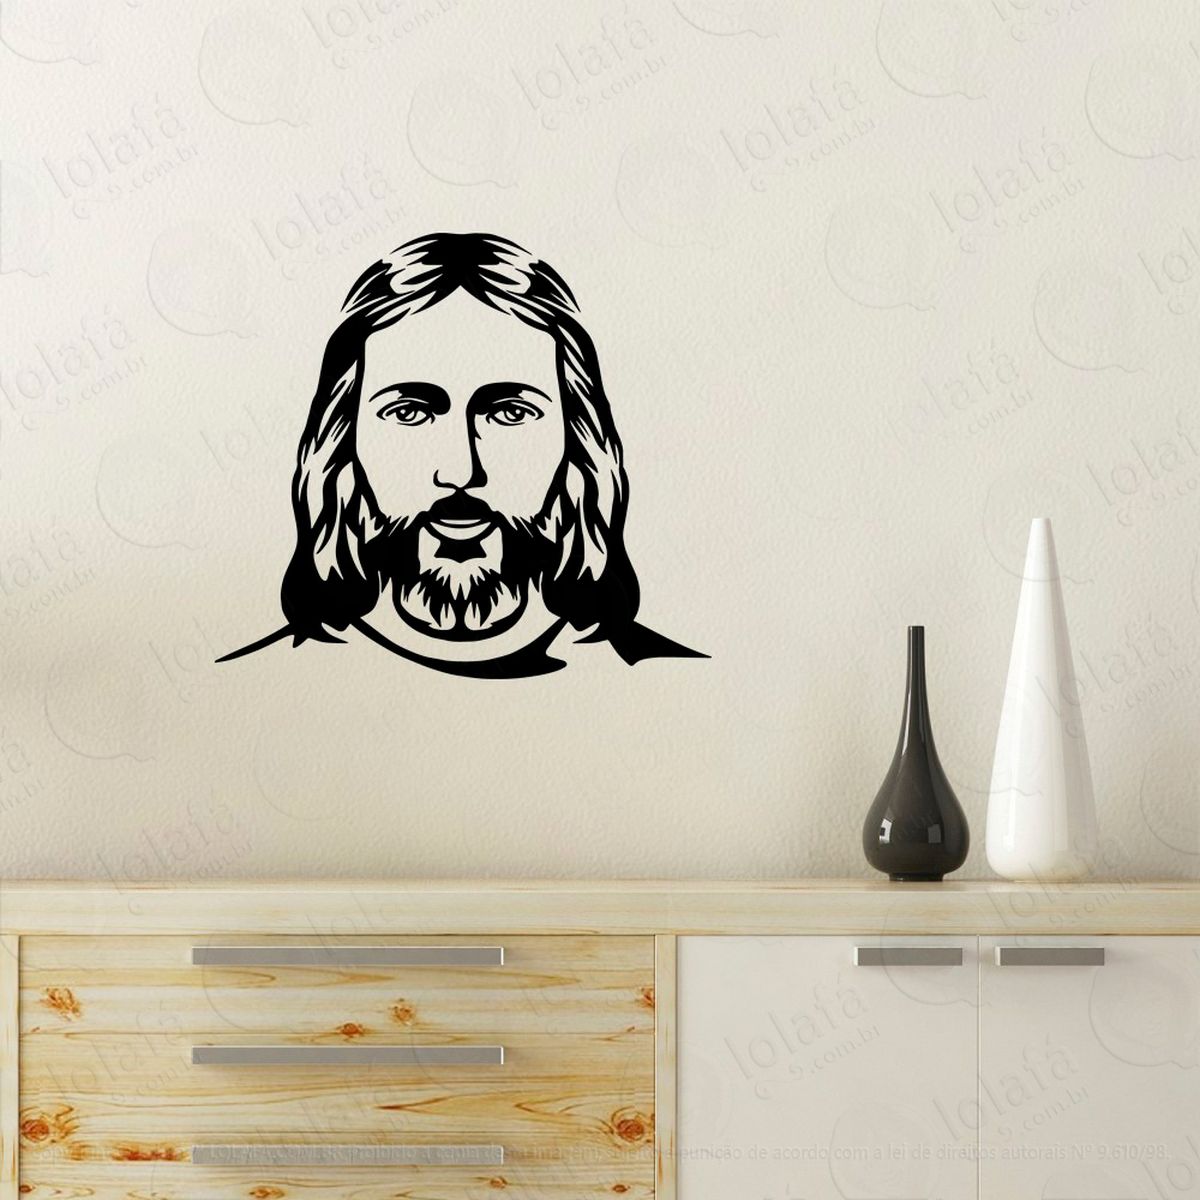 jesus cristo adesivo de parede decorativo para casa, quarto, sala e vidro - mod:10